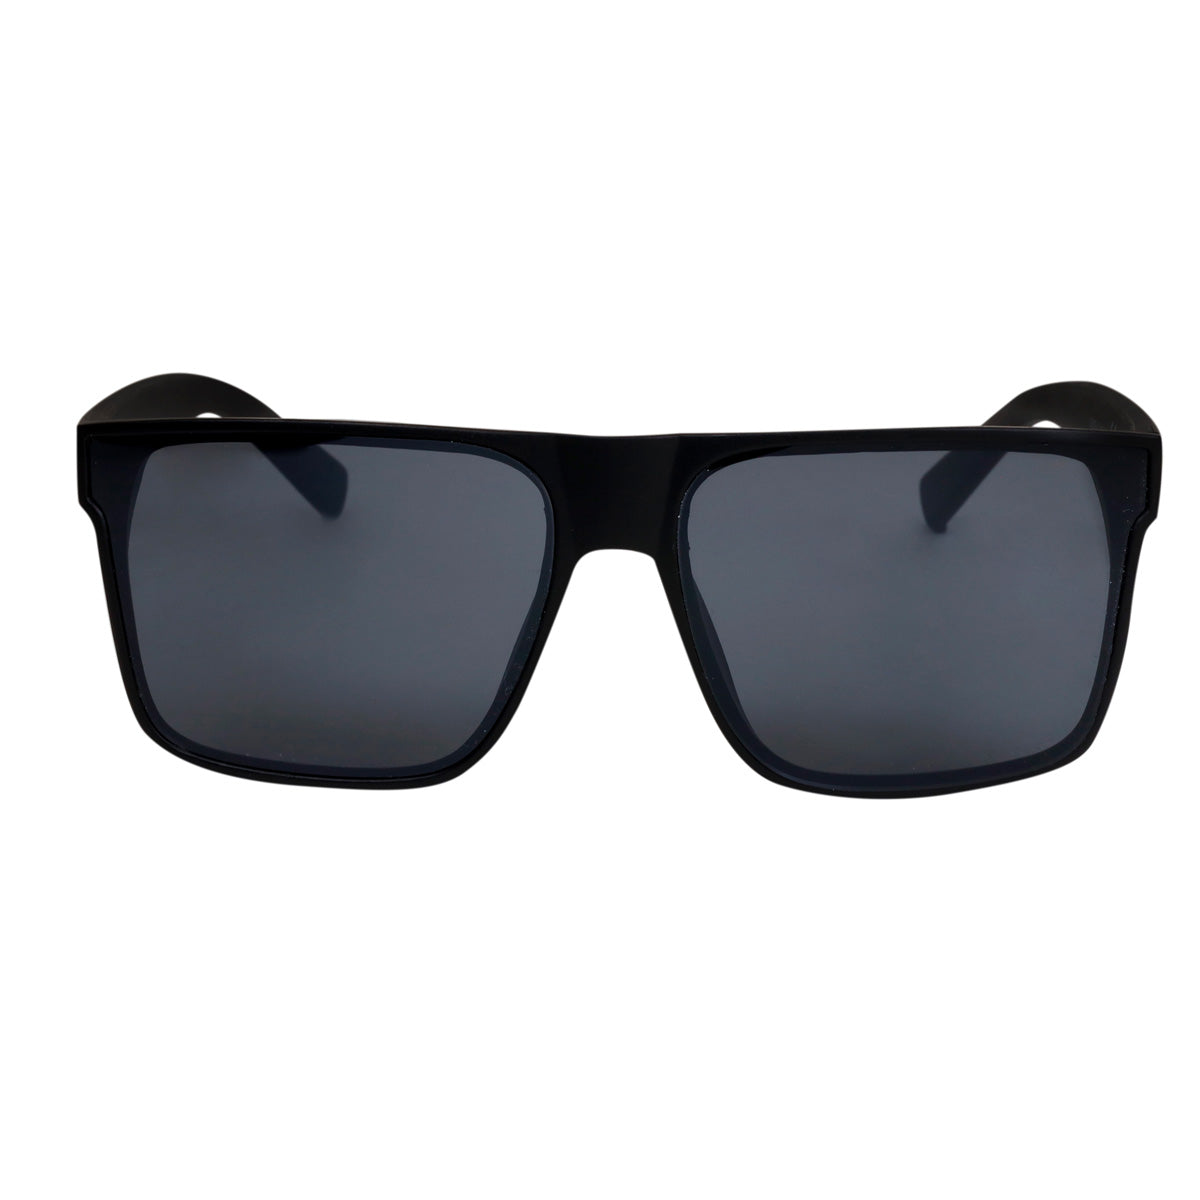 Men's angled sunglasses